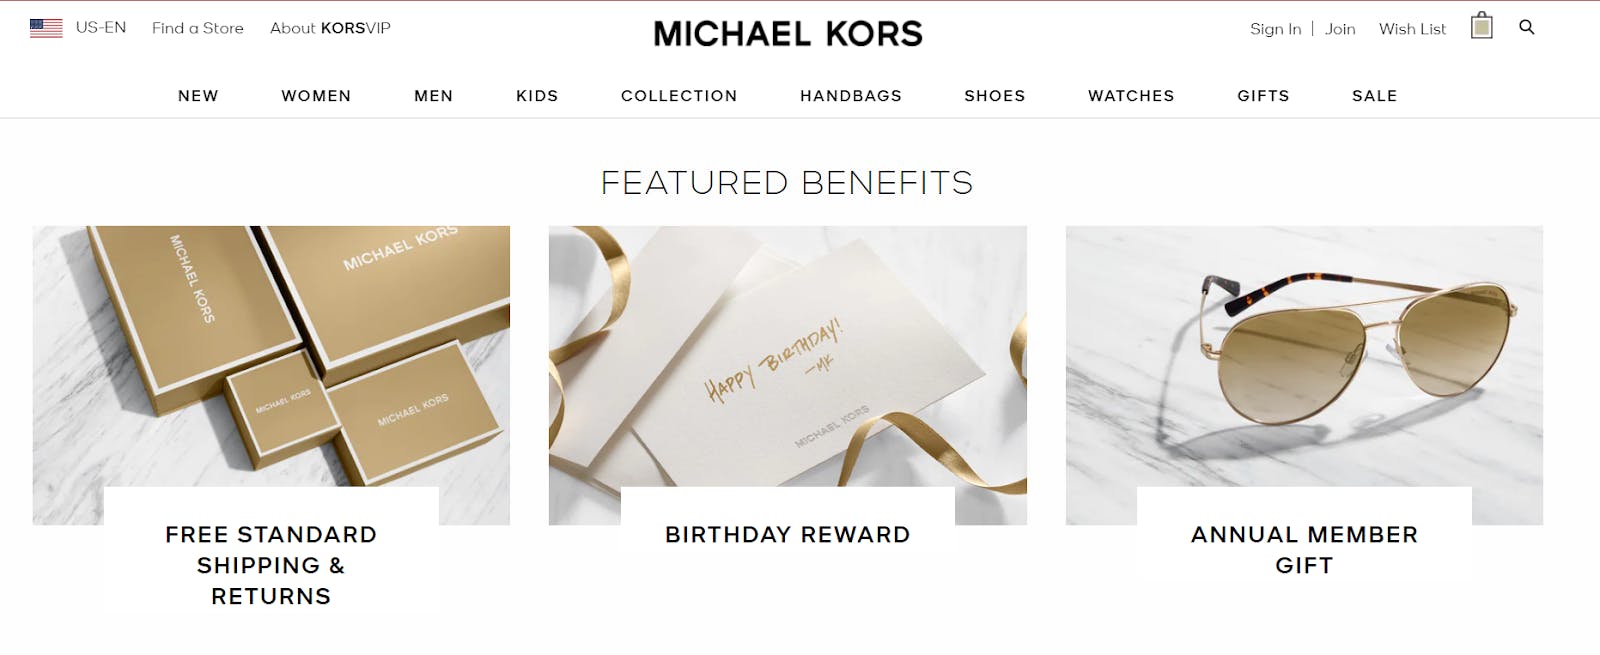 The Michael Kors membership signup page.